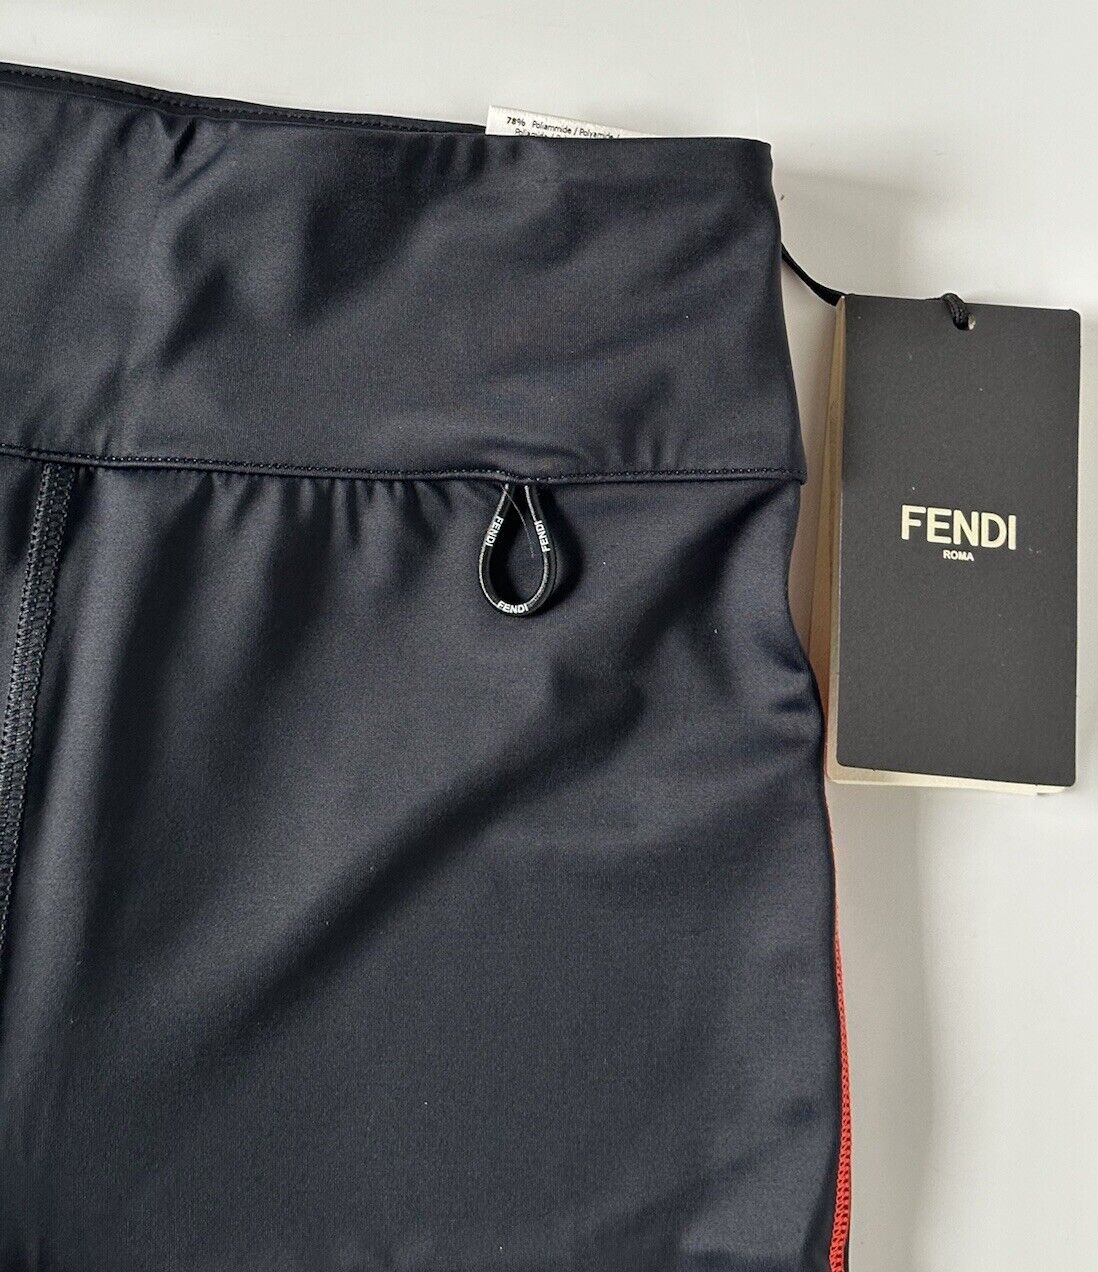 NWT $430 Fendi Women's Track Shorts Medium Black  Made in Italy FAB309